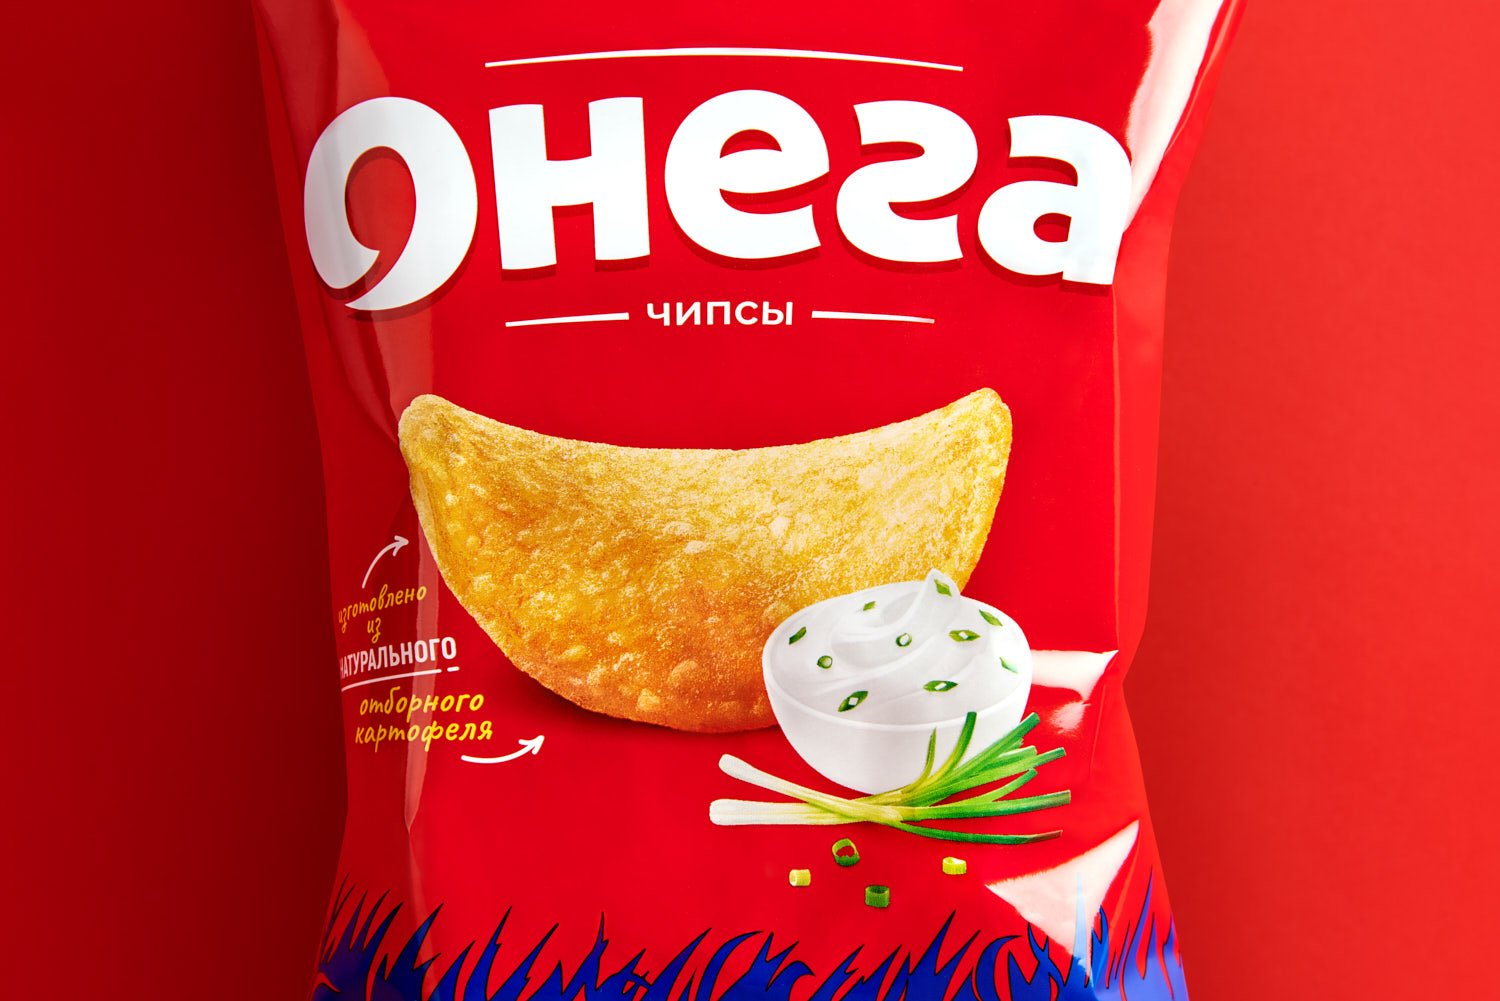 Ооо онега. Онега чипсы. Онега логотип. Онега упаковка. Белорусские чипсы Онега.